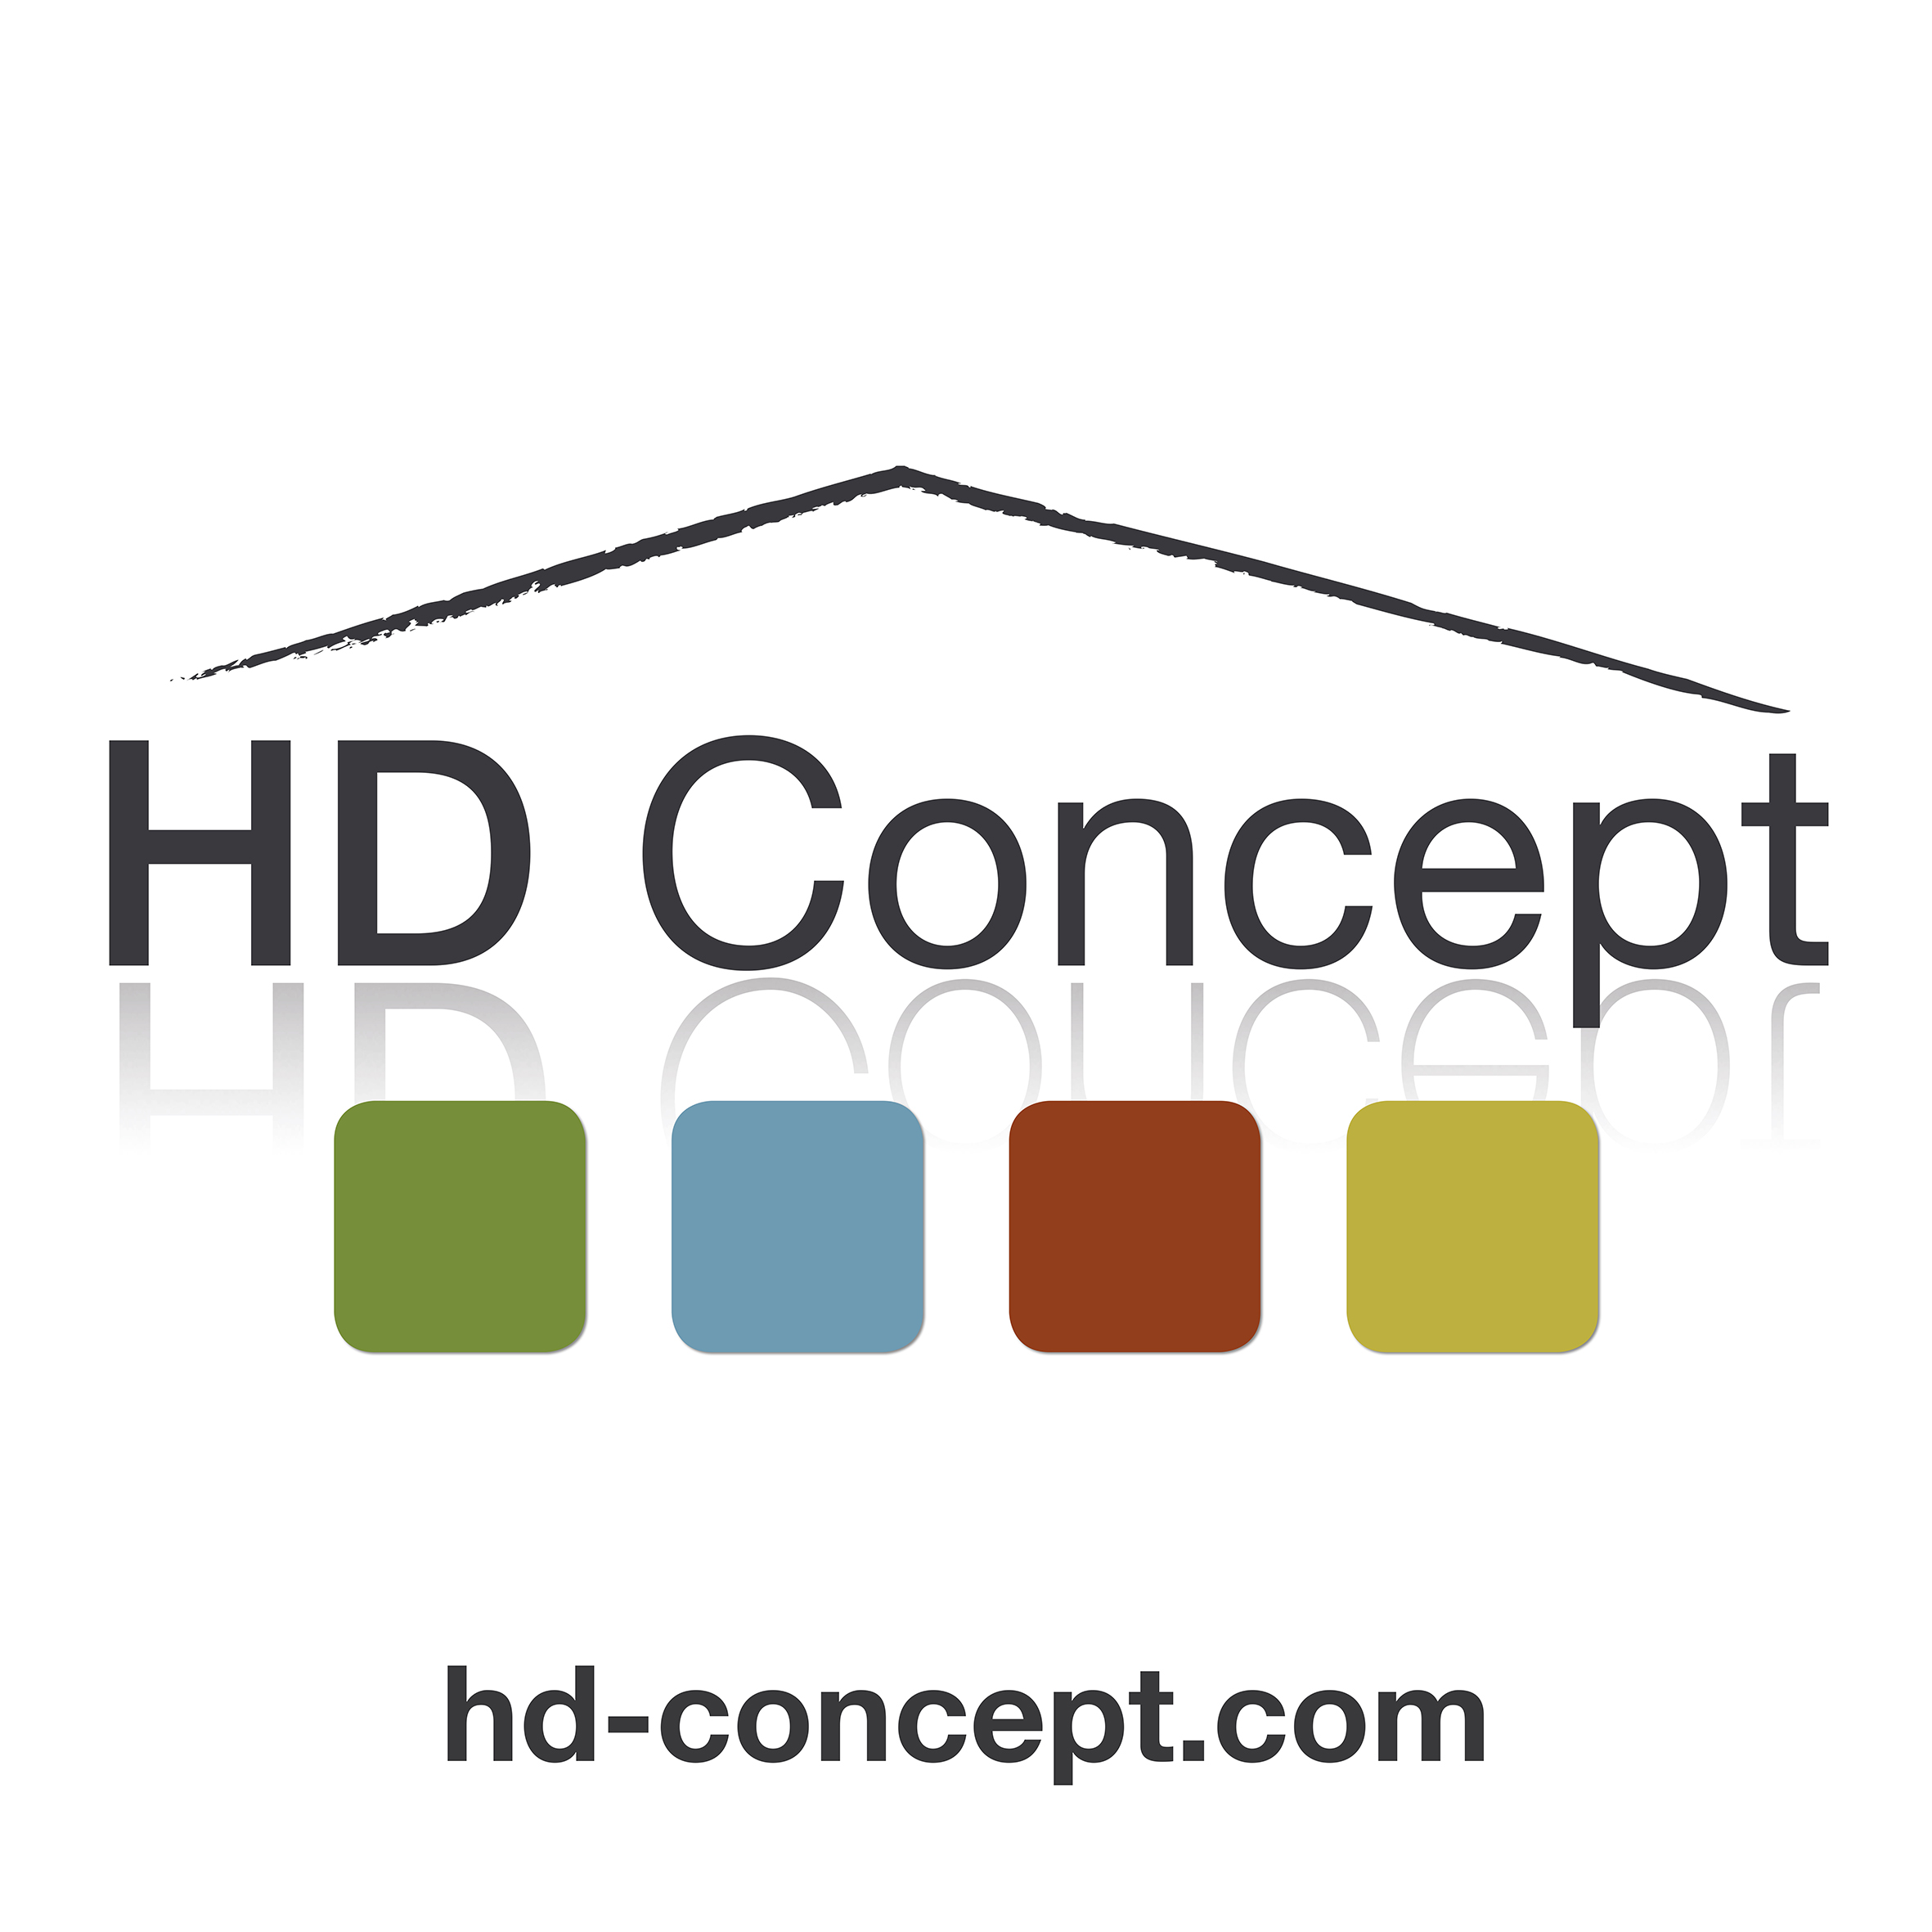 HD Concept